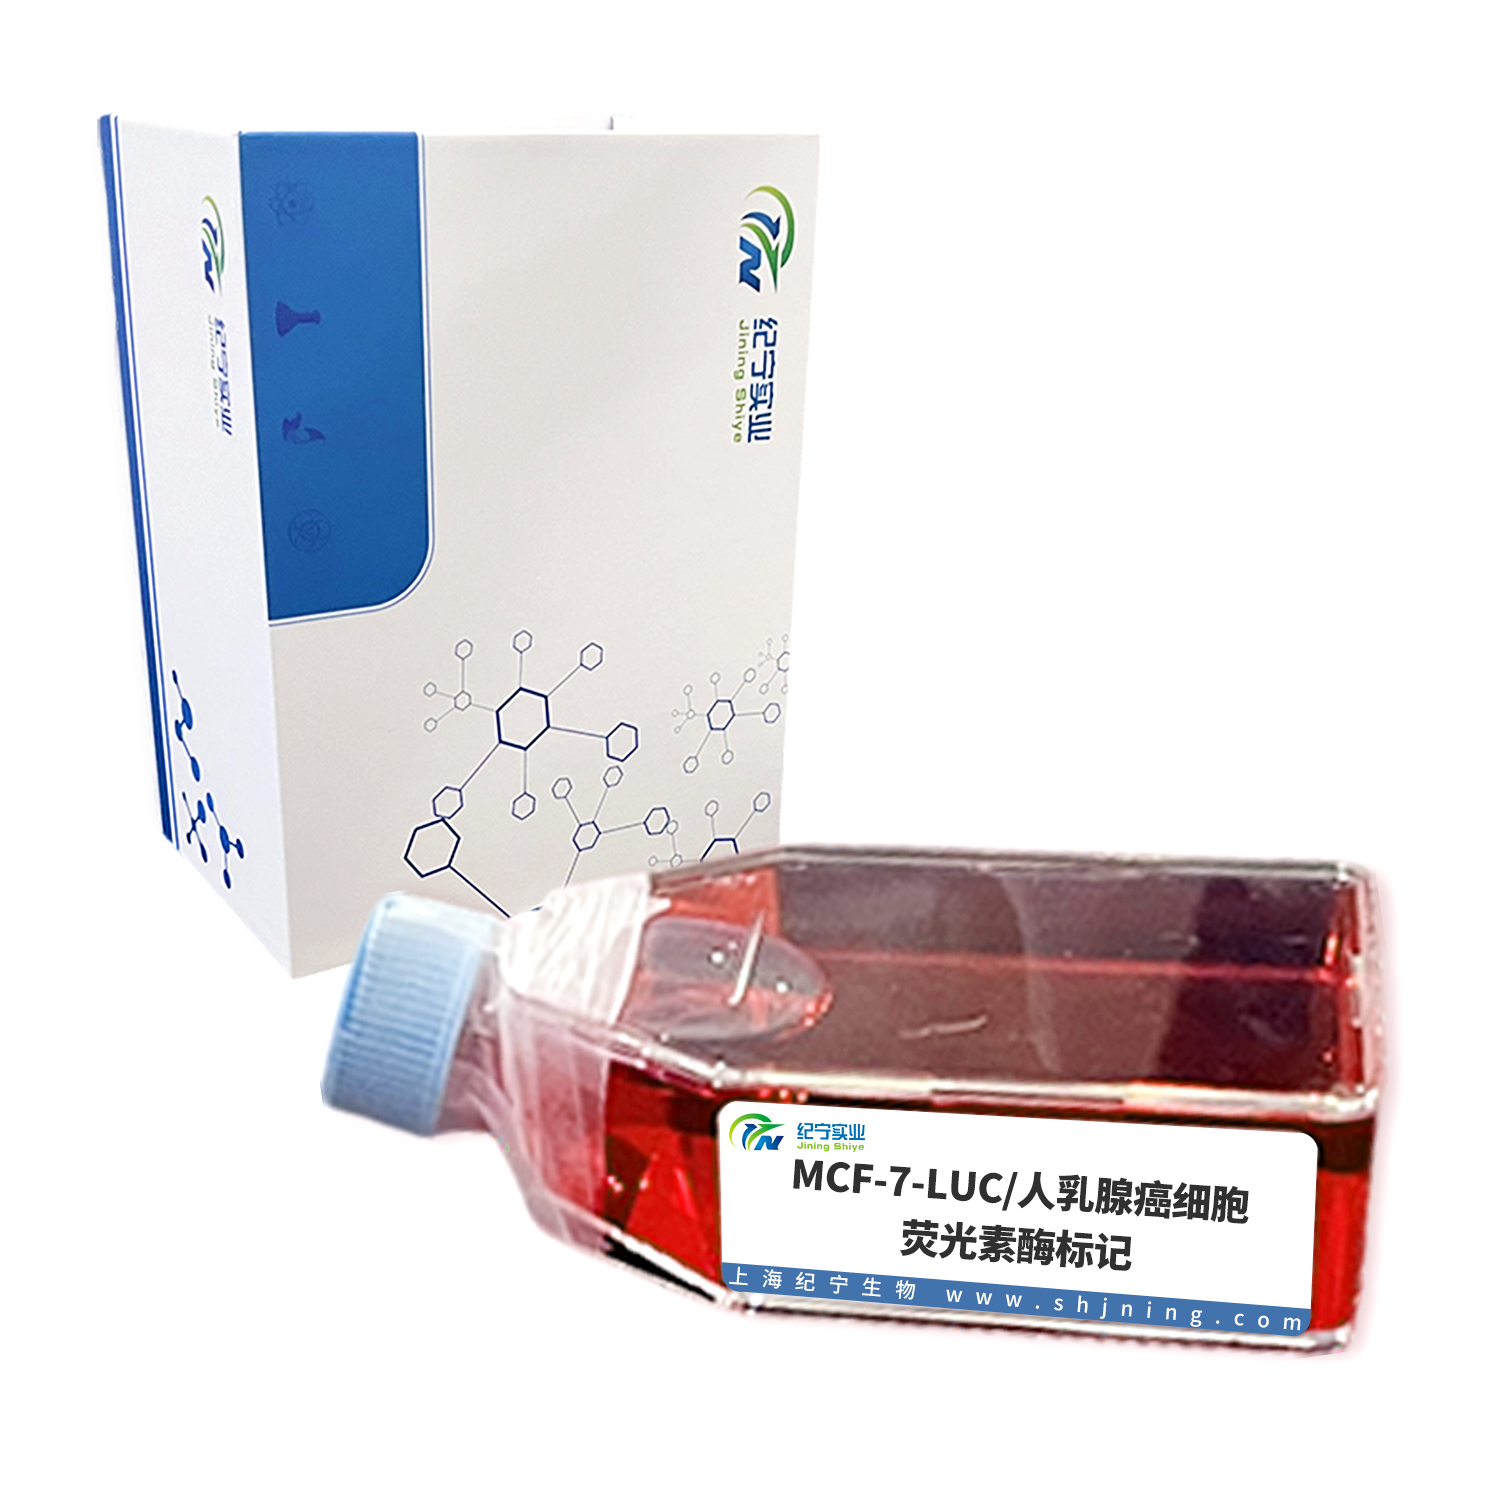 MCF-7-LUC/人乳腺癌细胞-荧光素酶标记